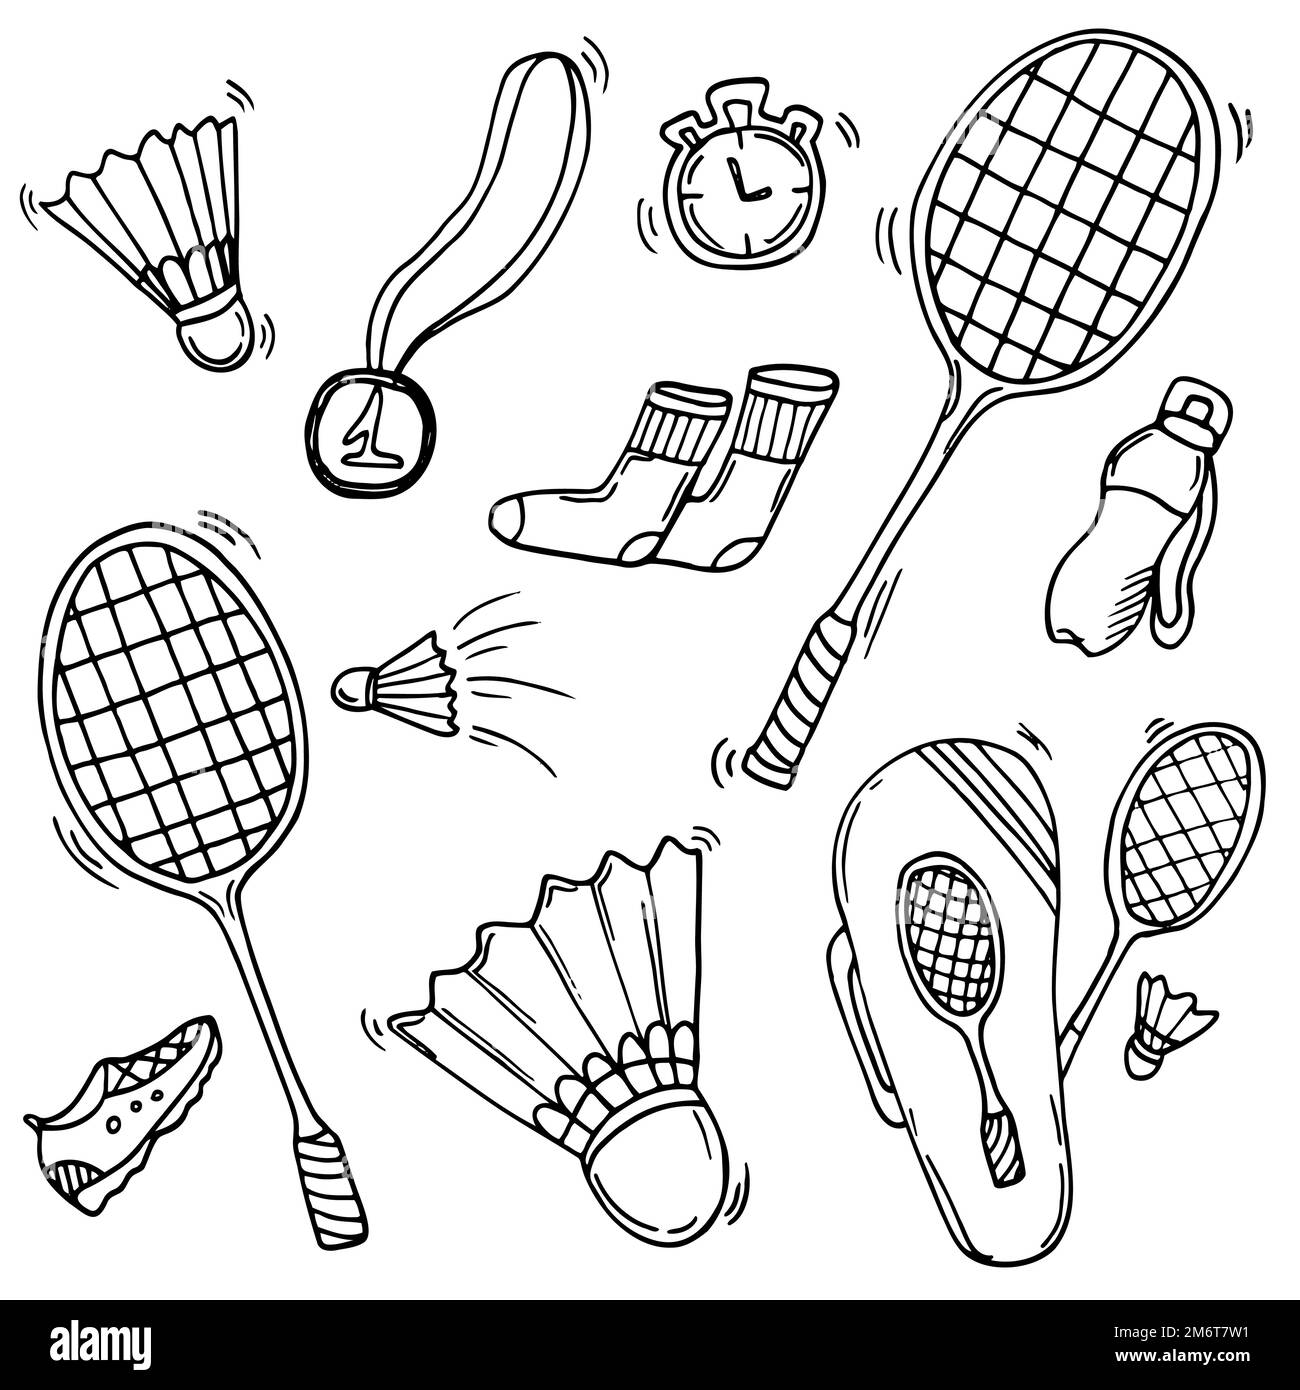 Doodle Badminton Icons set. Spring sport vector illustration. Stock Vector